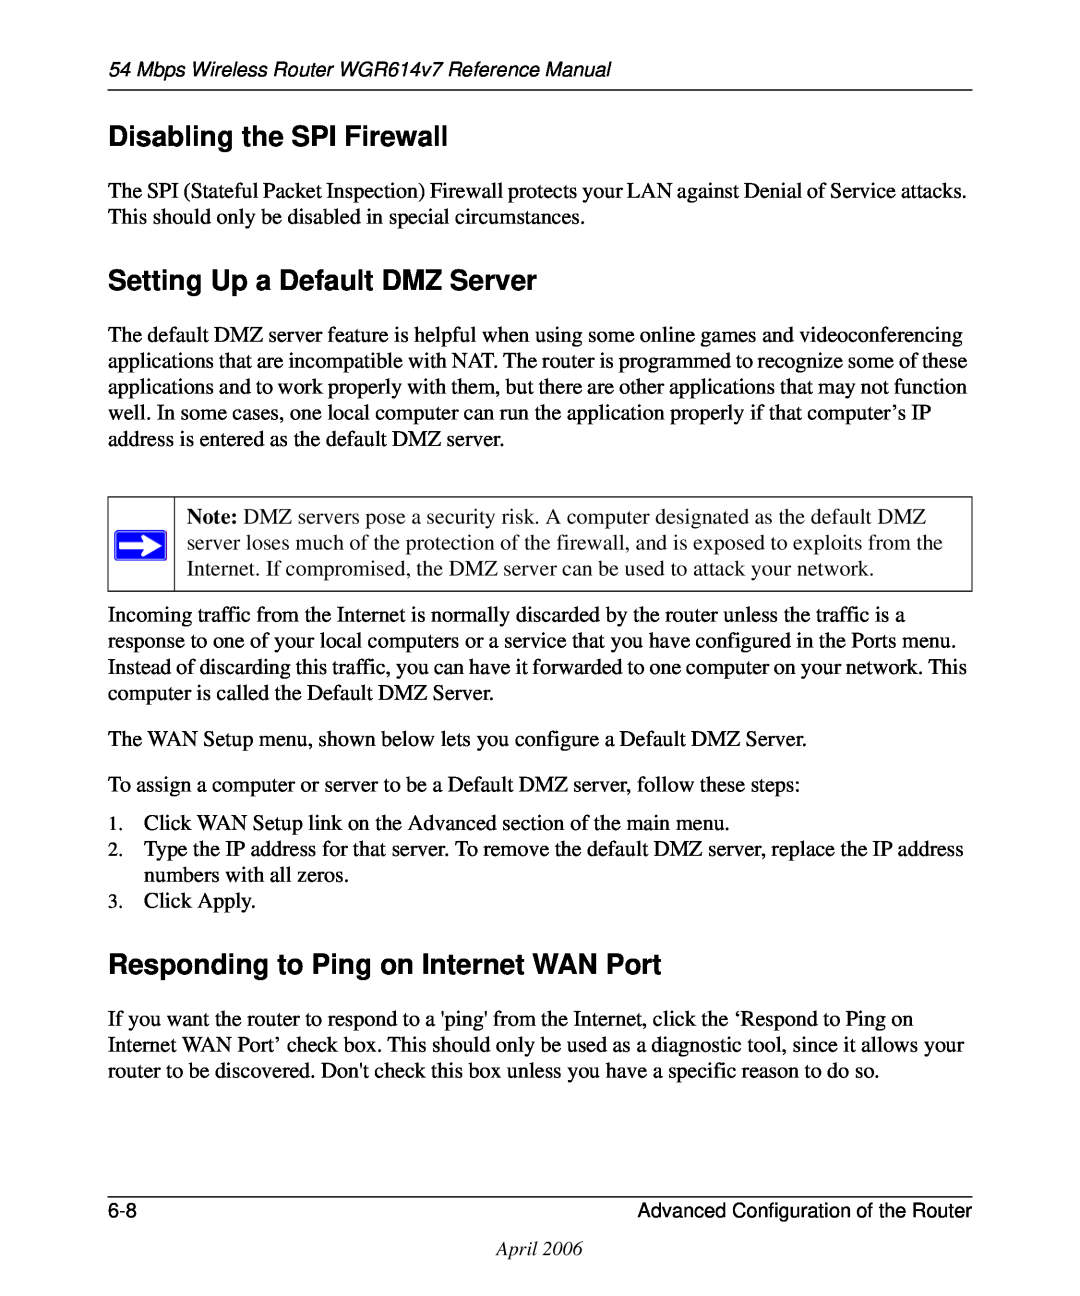 NETGEAR WGR614v7 Disabling the SPI Firewall, Setting Up a Default DMZ Server, Responding to Ping on Internet WAN Port 